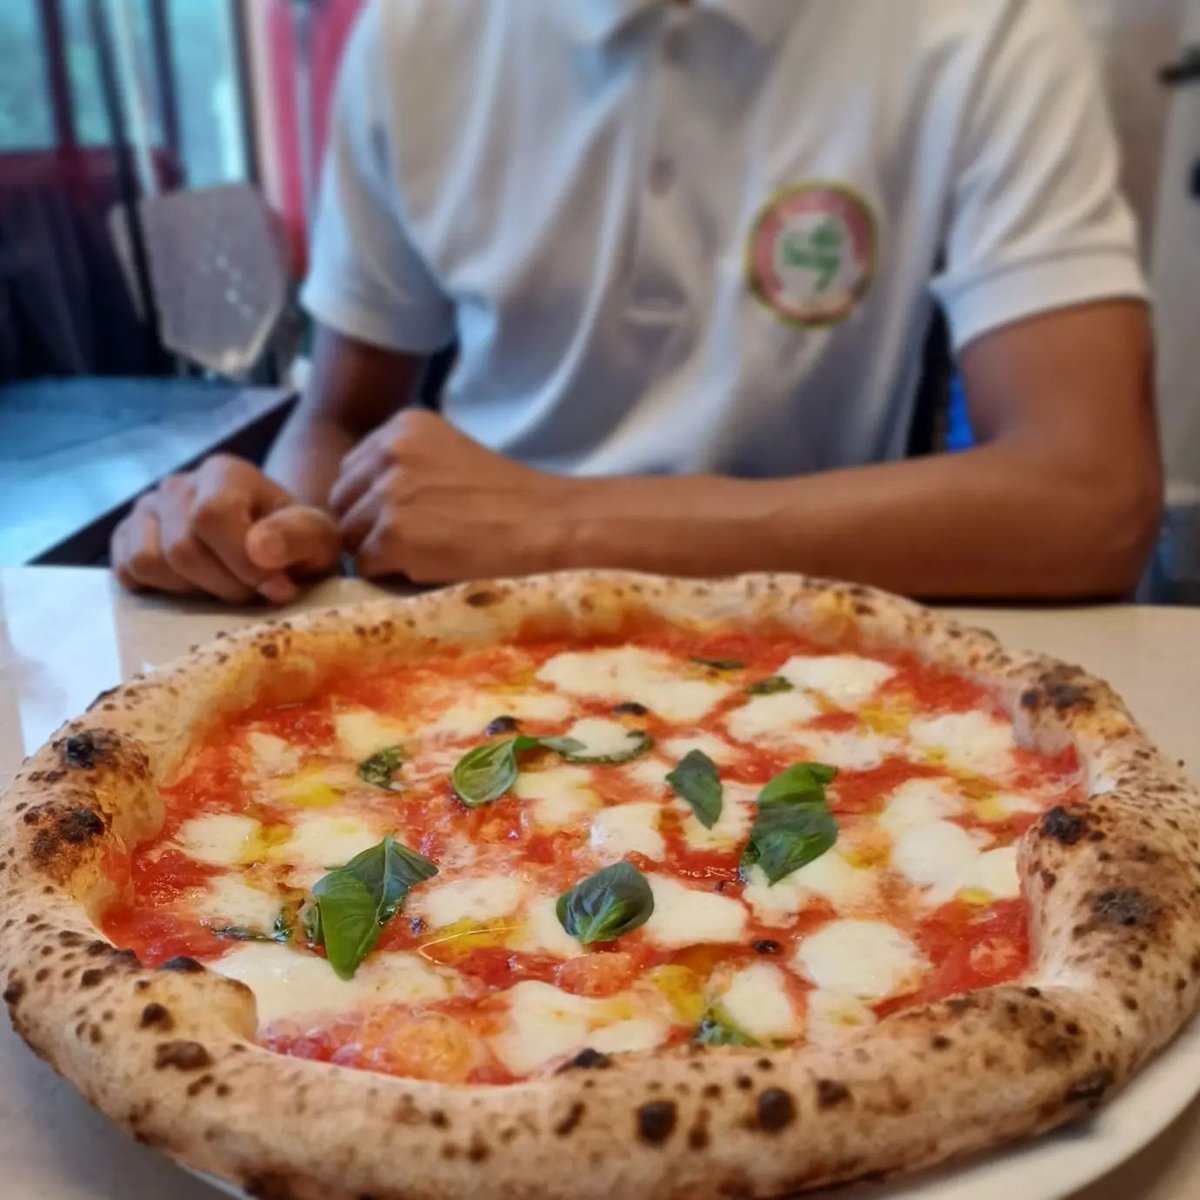 I know... It's raining really bad in our Gaon but...who cares?! We have pizza!
.
#dasusyitalianpizza #dasusygurgaon
#bestpizzeriainindia #44bestpizzeriaAsia #50toppizza
#pizzeria #food #gurgaon #delhi #delhigram #delhifoodies #gurgaonfoodies #pizza #pizzatime  #pizzaparty